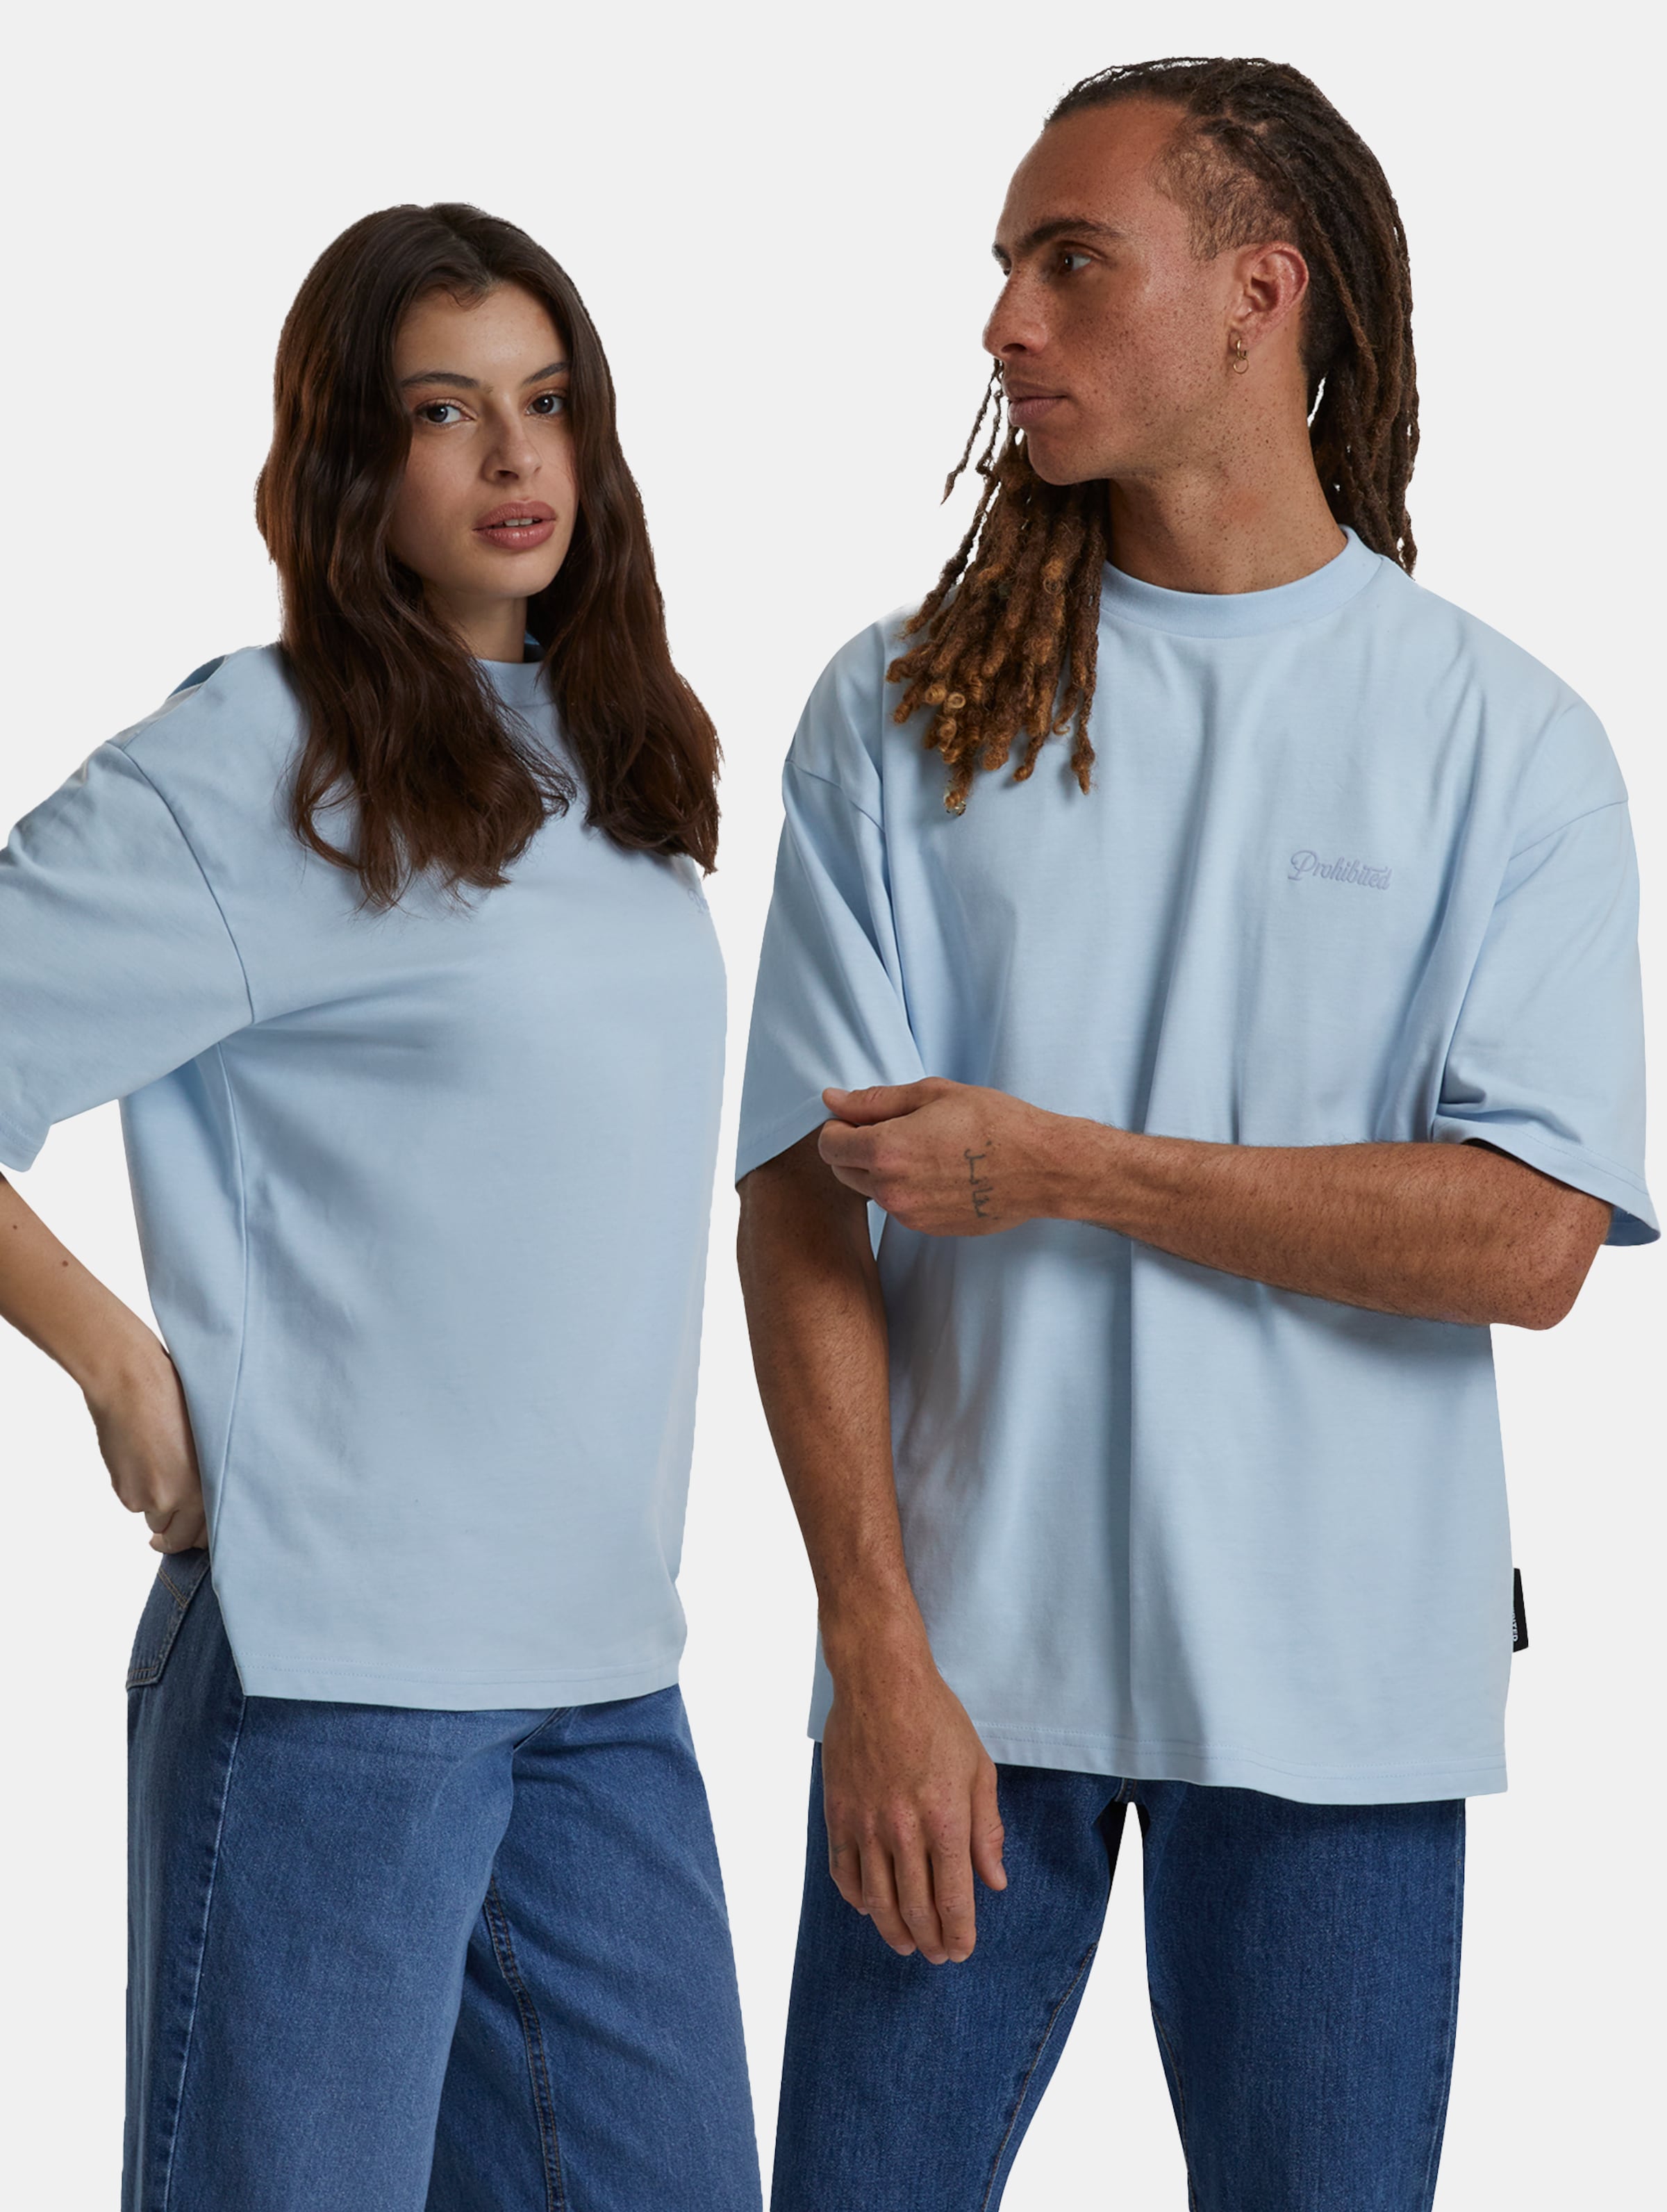 Prohibited 10119 V2 T-Shirts Frauen,Männer,Unisex op kleur blauw, Maat M